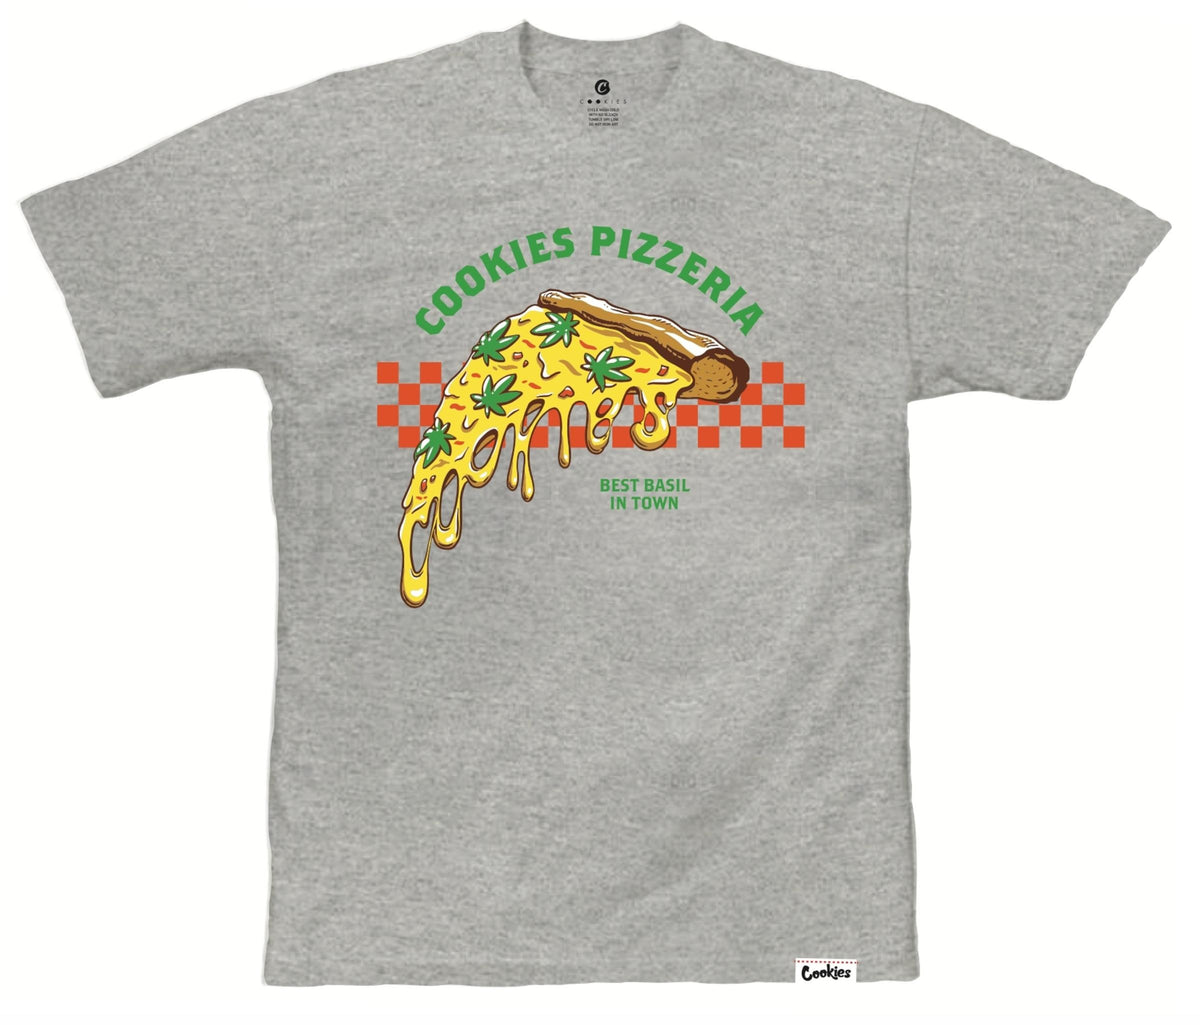 Cookies Pizzeria T-shirt (+2 colors)